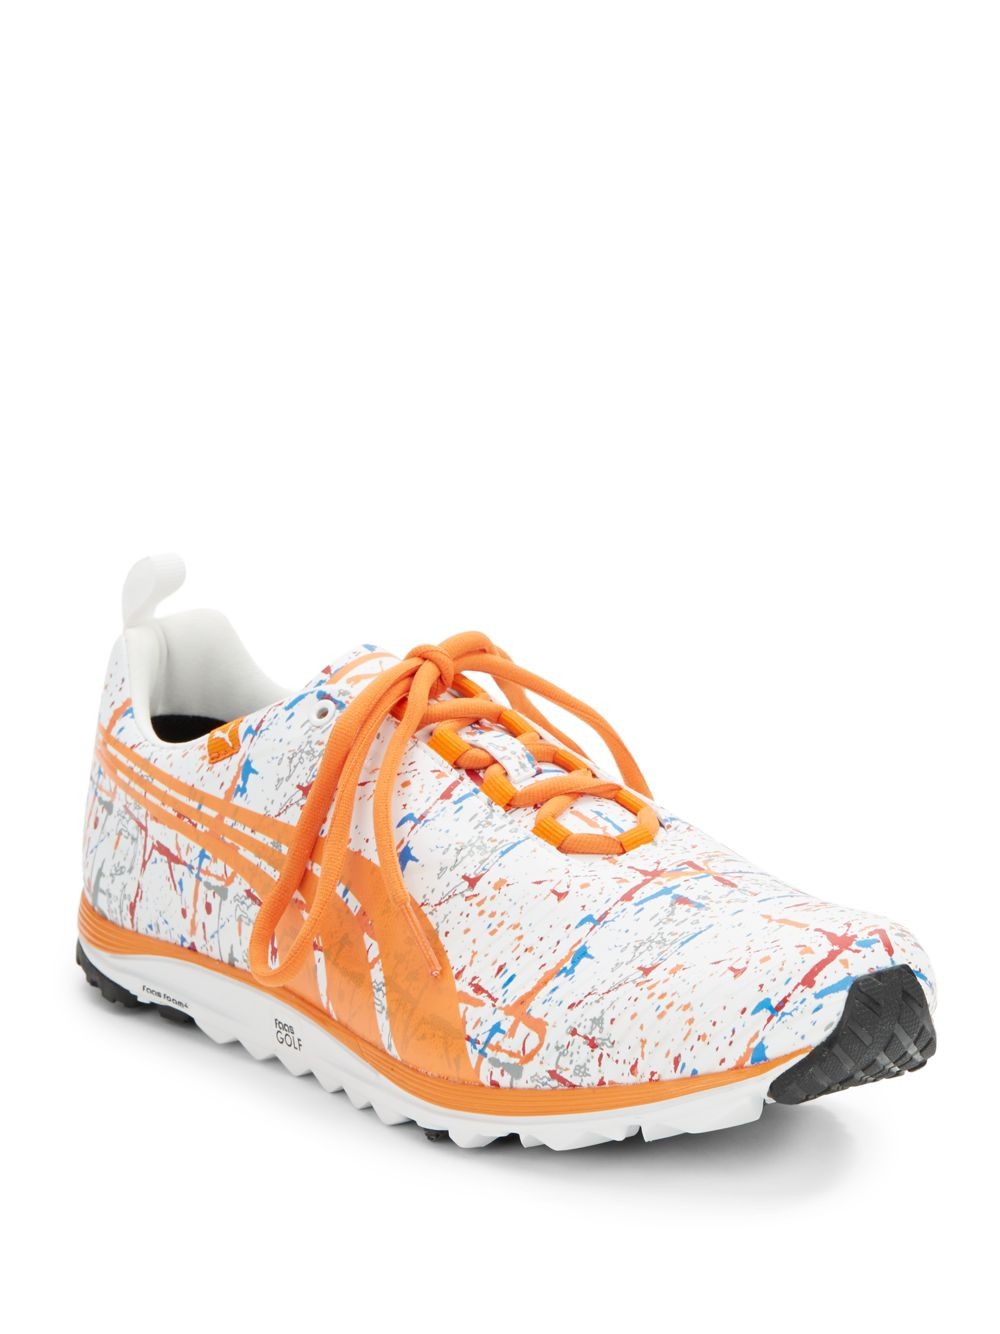 puma splatter golf shoes